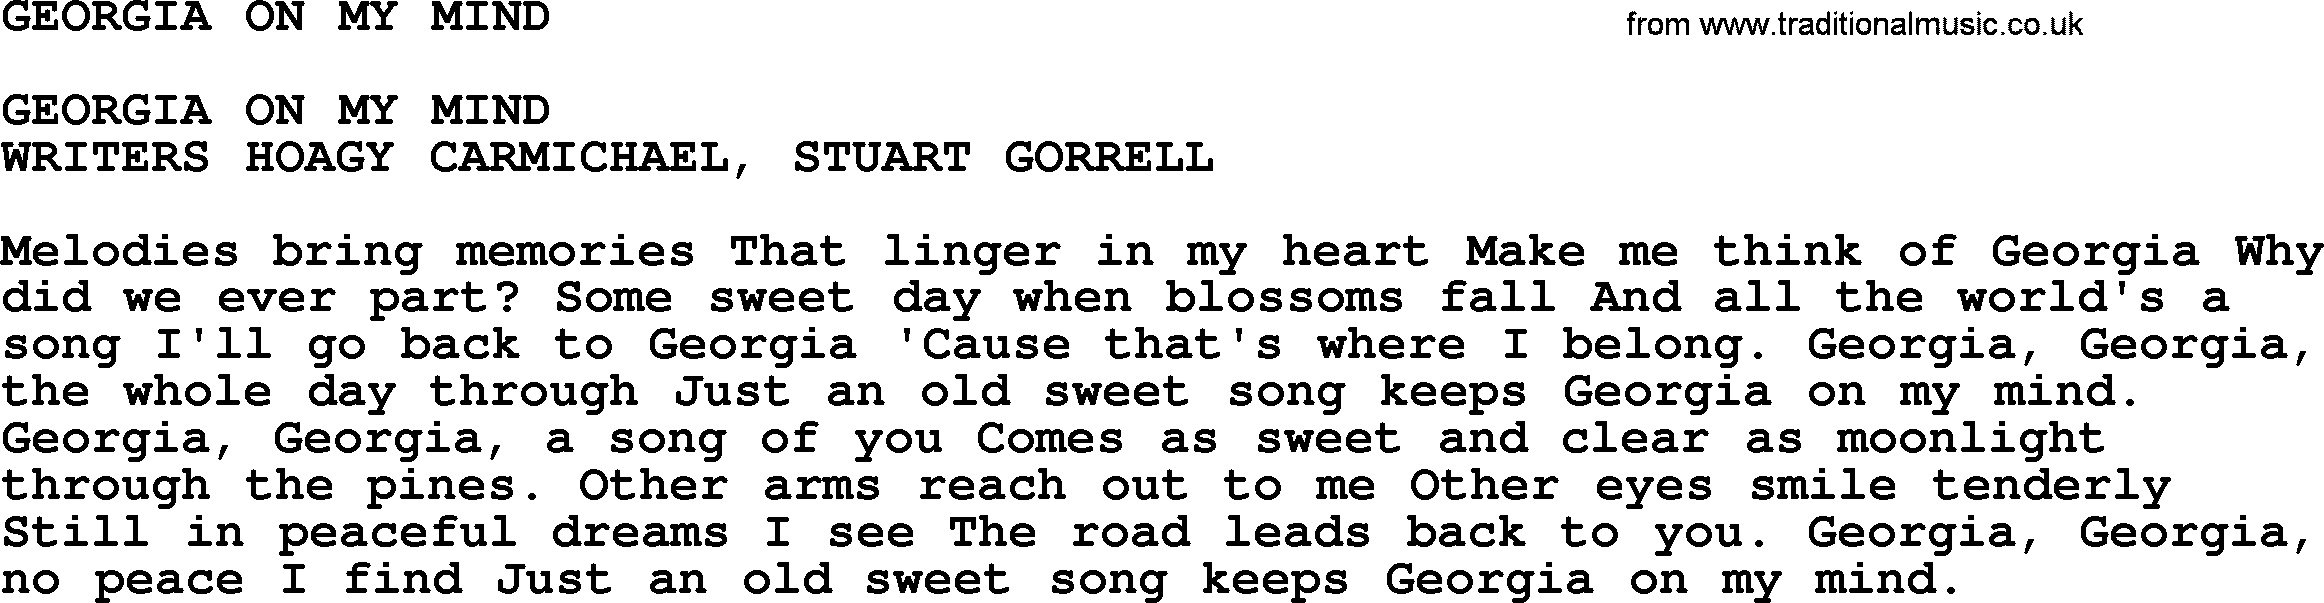 Merle Haggard song: Georgia On My Mind, lyrics.